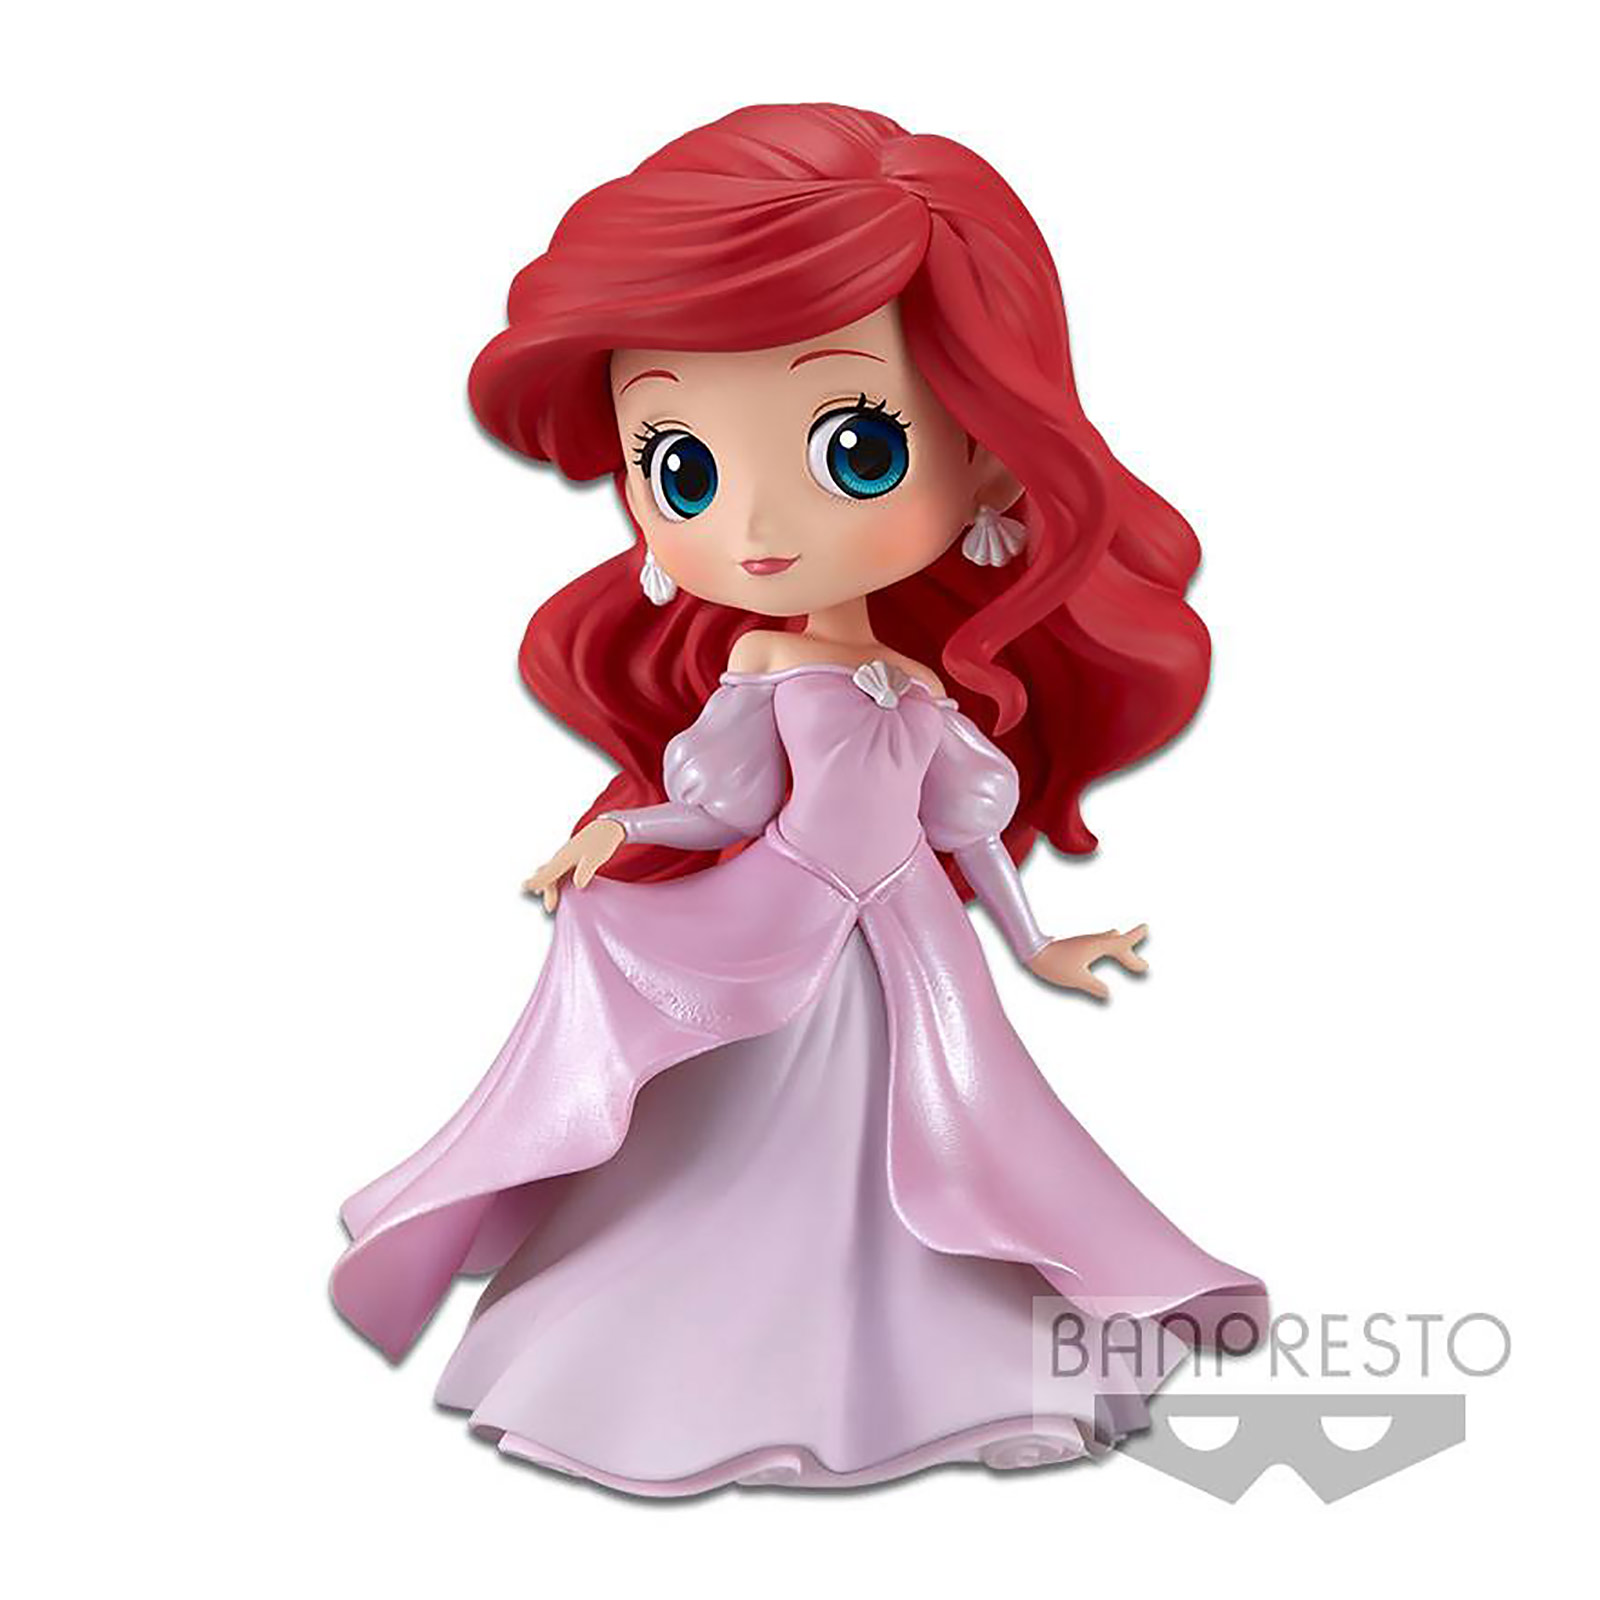 Arielle - Die kleine Meerjungfrau Pink Dress Q Posket Figur Version A